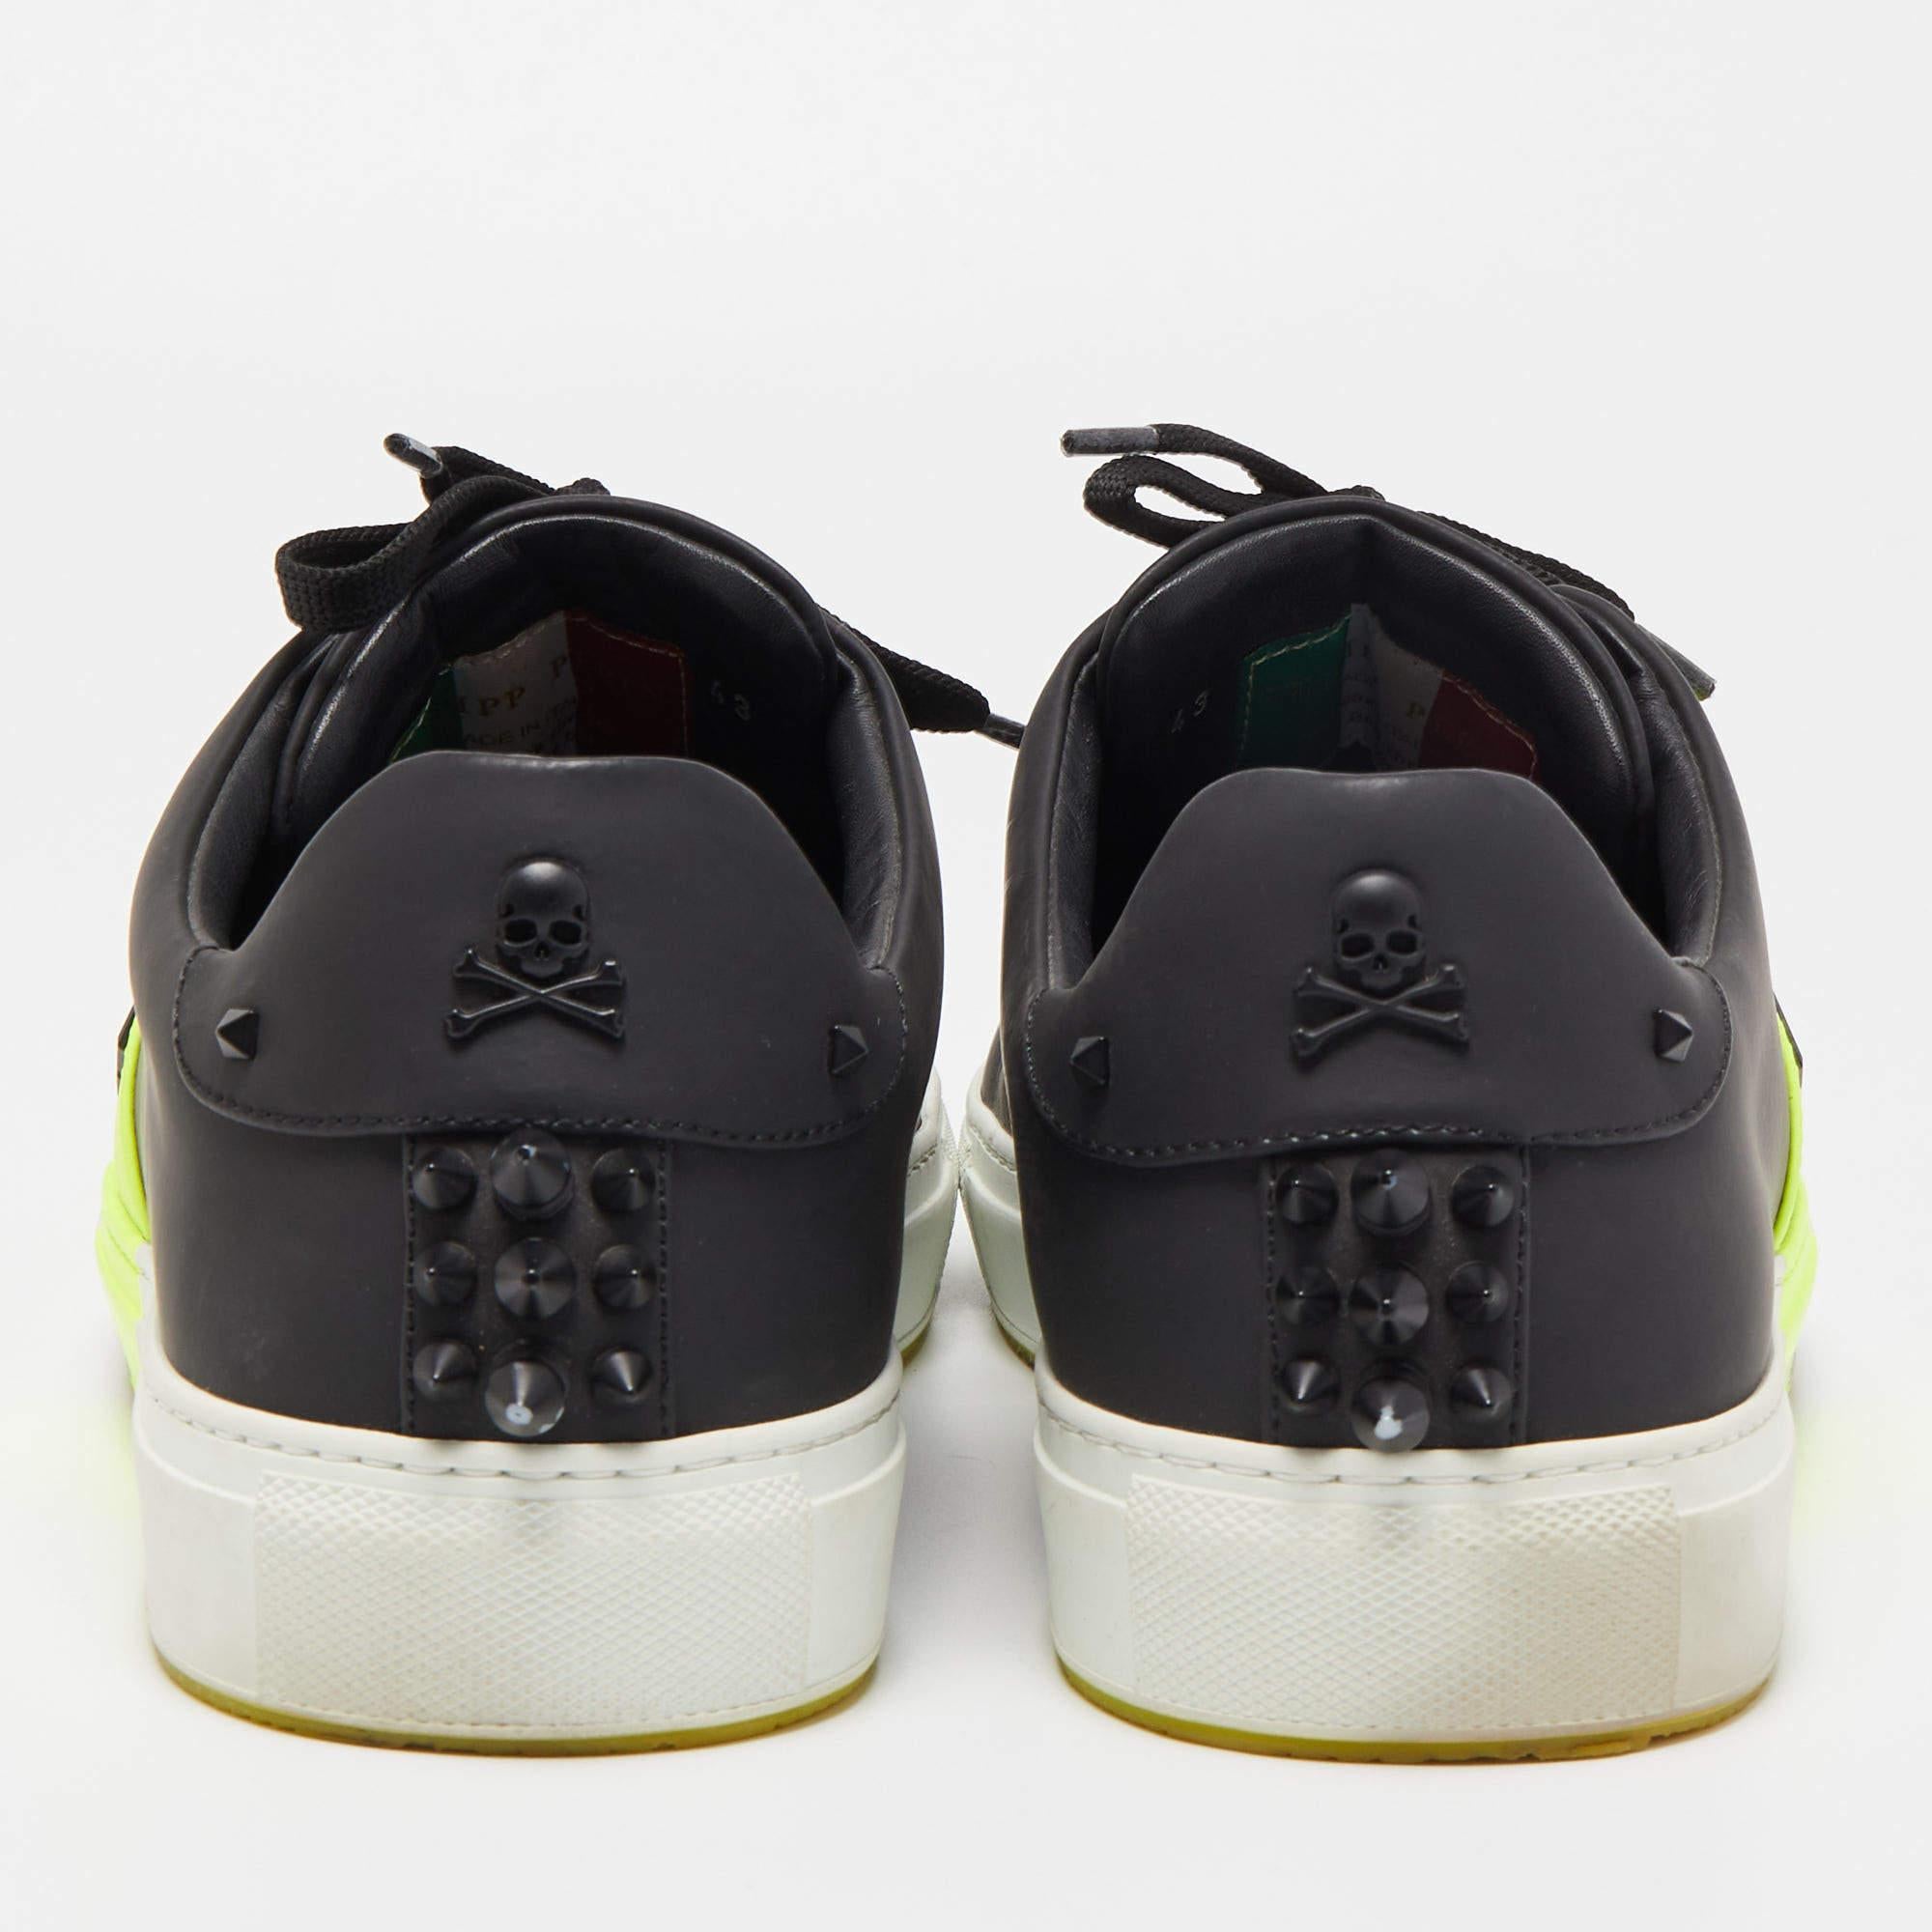 Phillip Plein Black Leather Studded Low Top Sneakers Size 43 In Good Condition For Sale In Dubai, Al Qouz 2